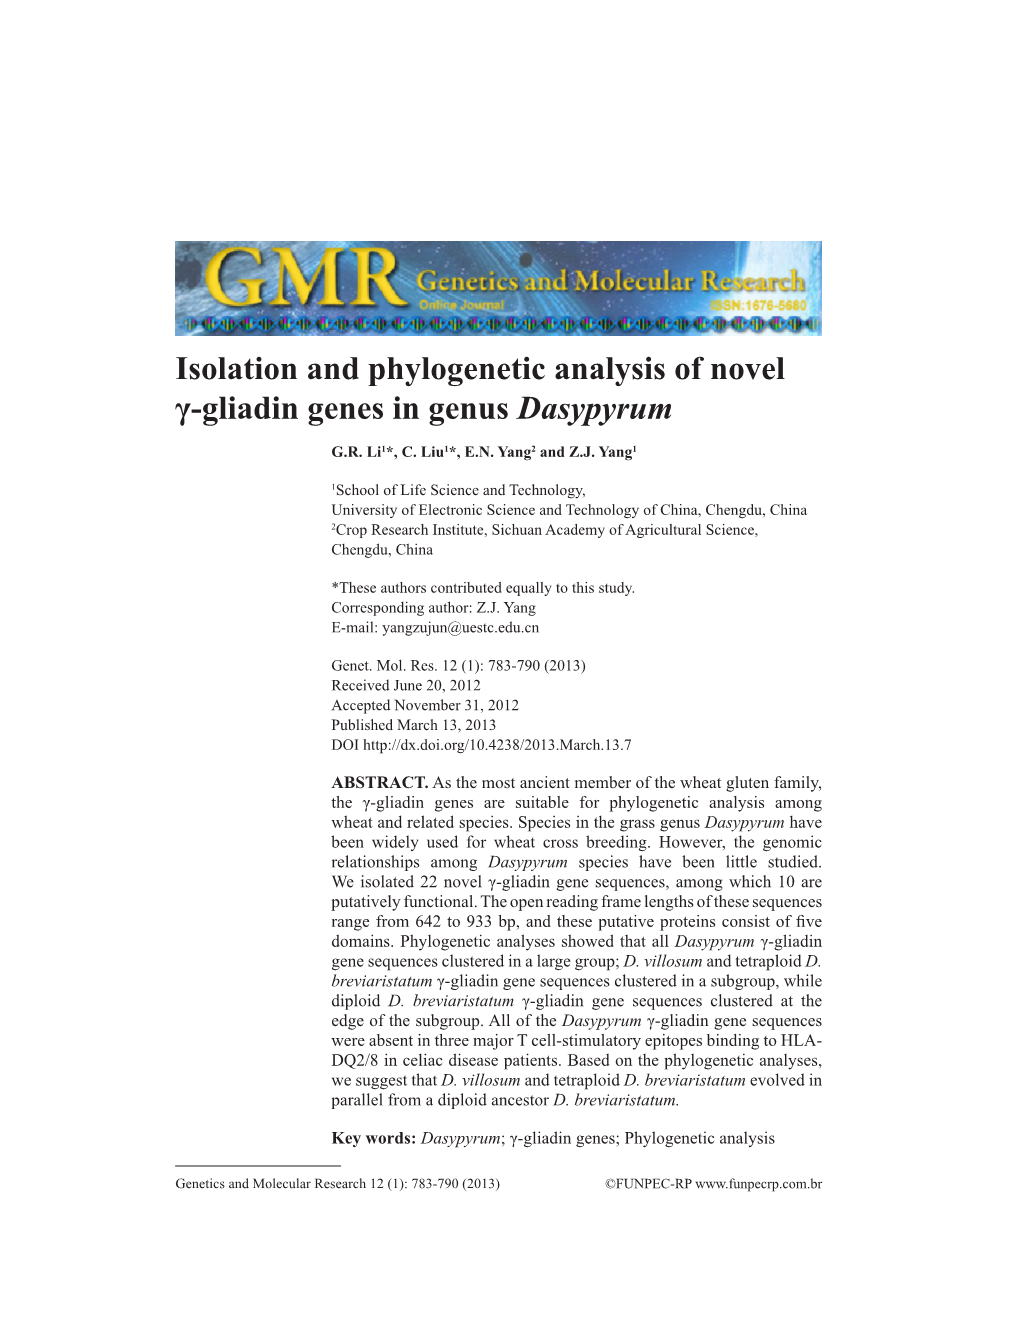 Isolation and Phylogenetic Analysis of Novel Γ-Gliadin Genes in Genus Dasypyrum